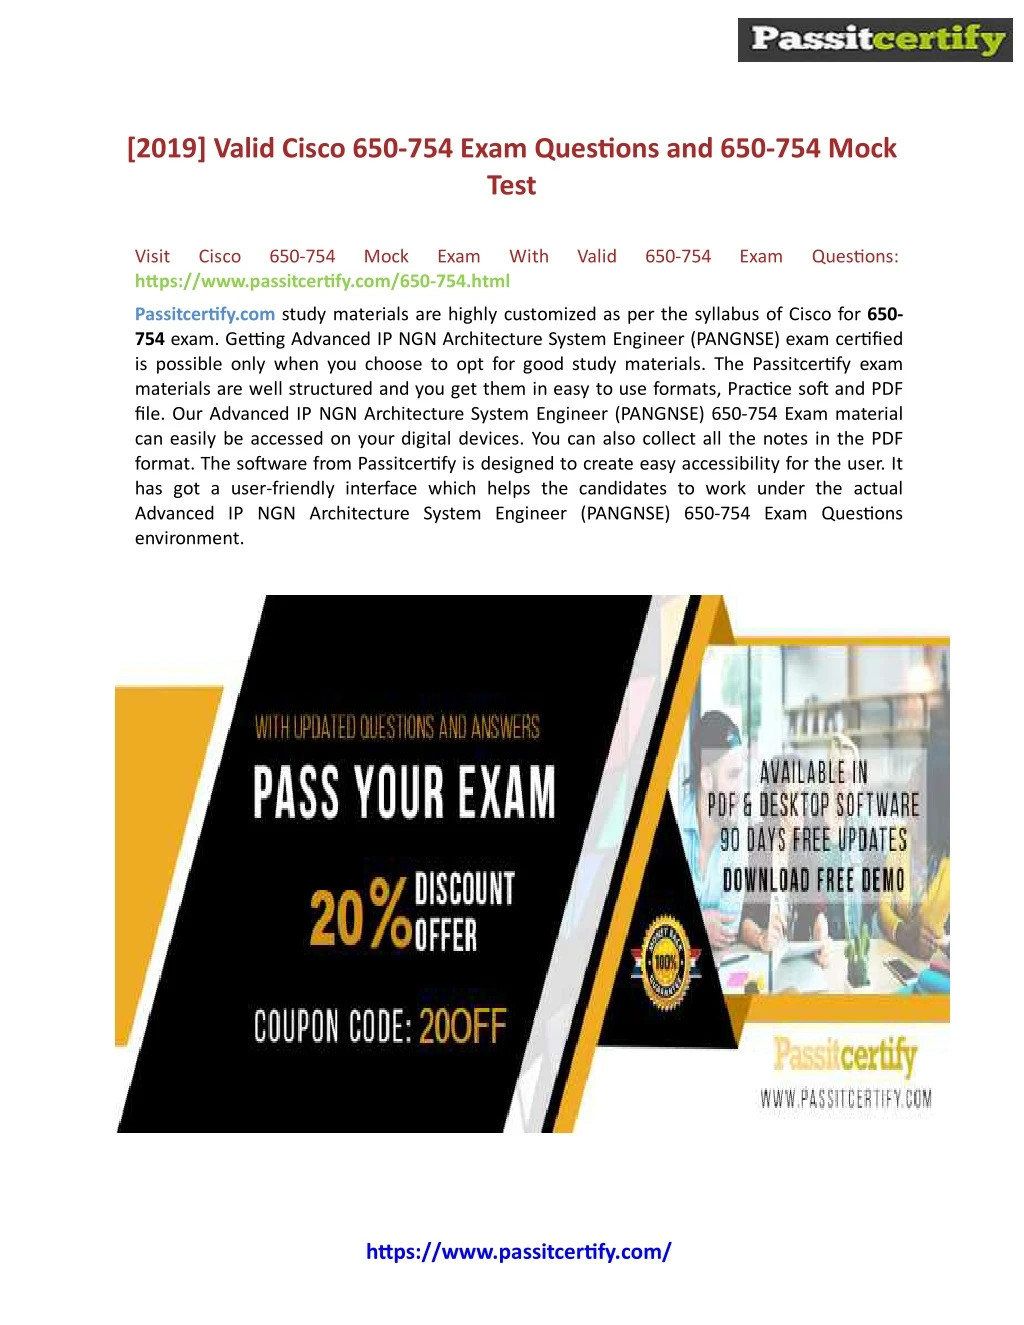 2019 valid cisco 650 754 exam questions